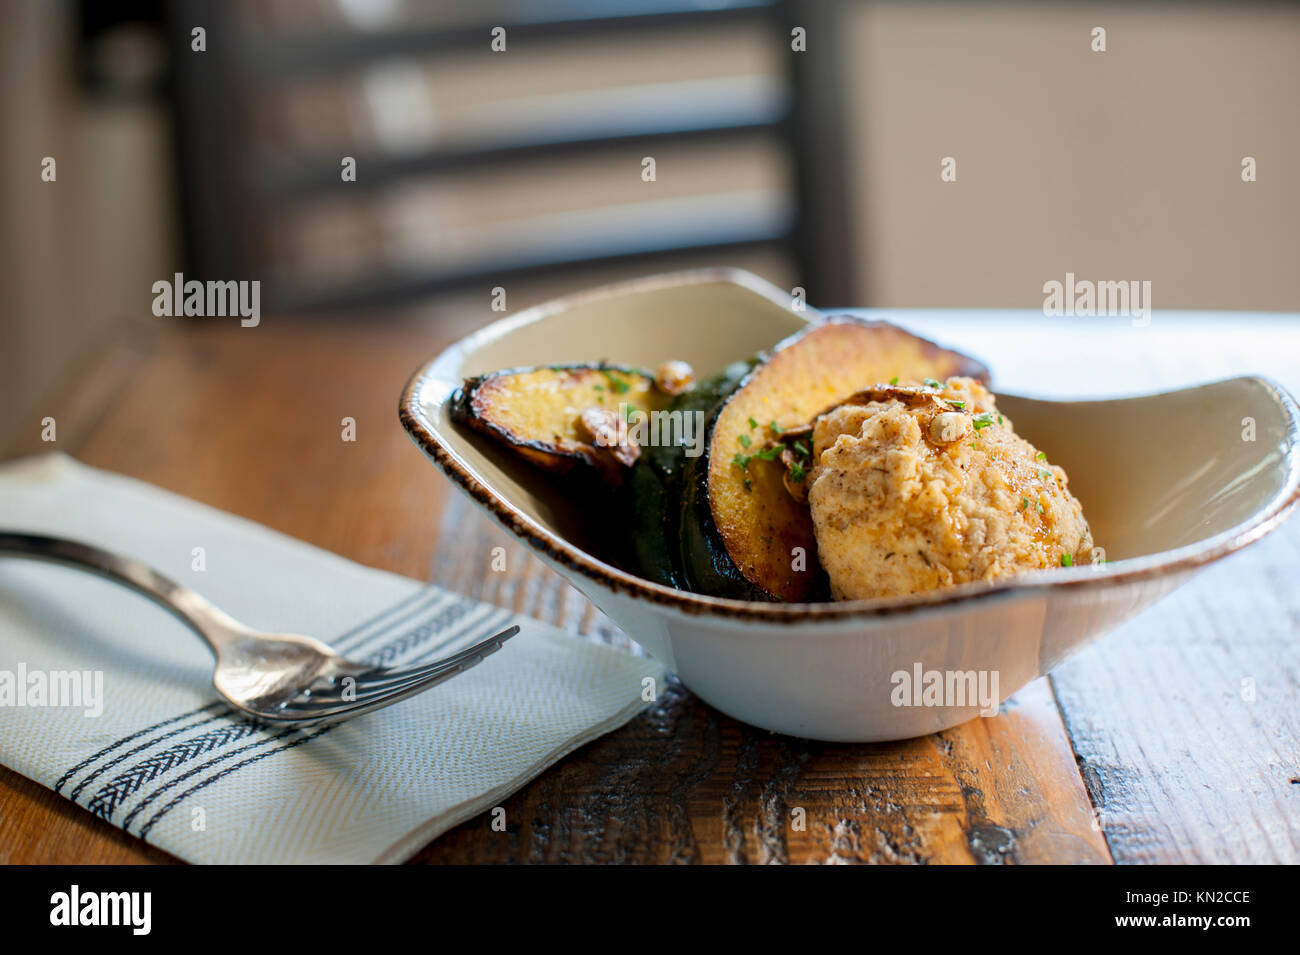 USA Virginia Williamsburg VA Culture Cafe serving fried mozzarella and acorn squash Stock Photo